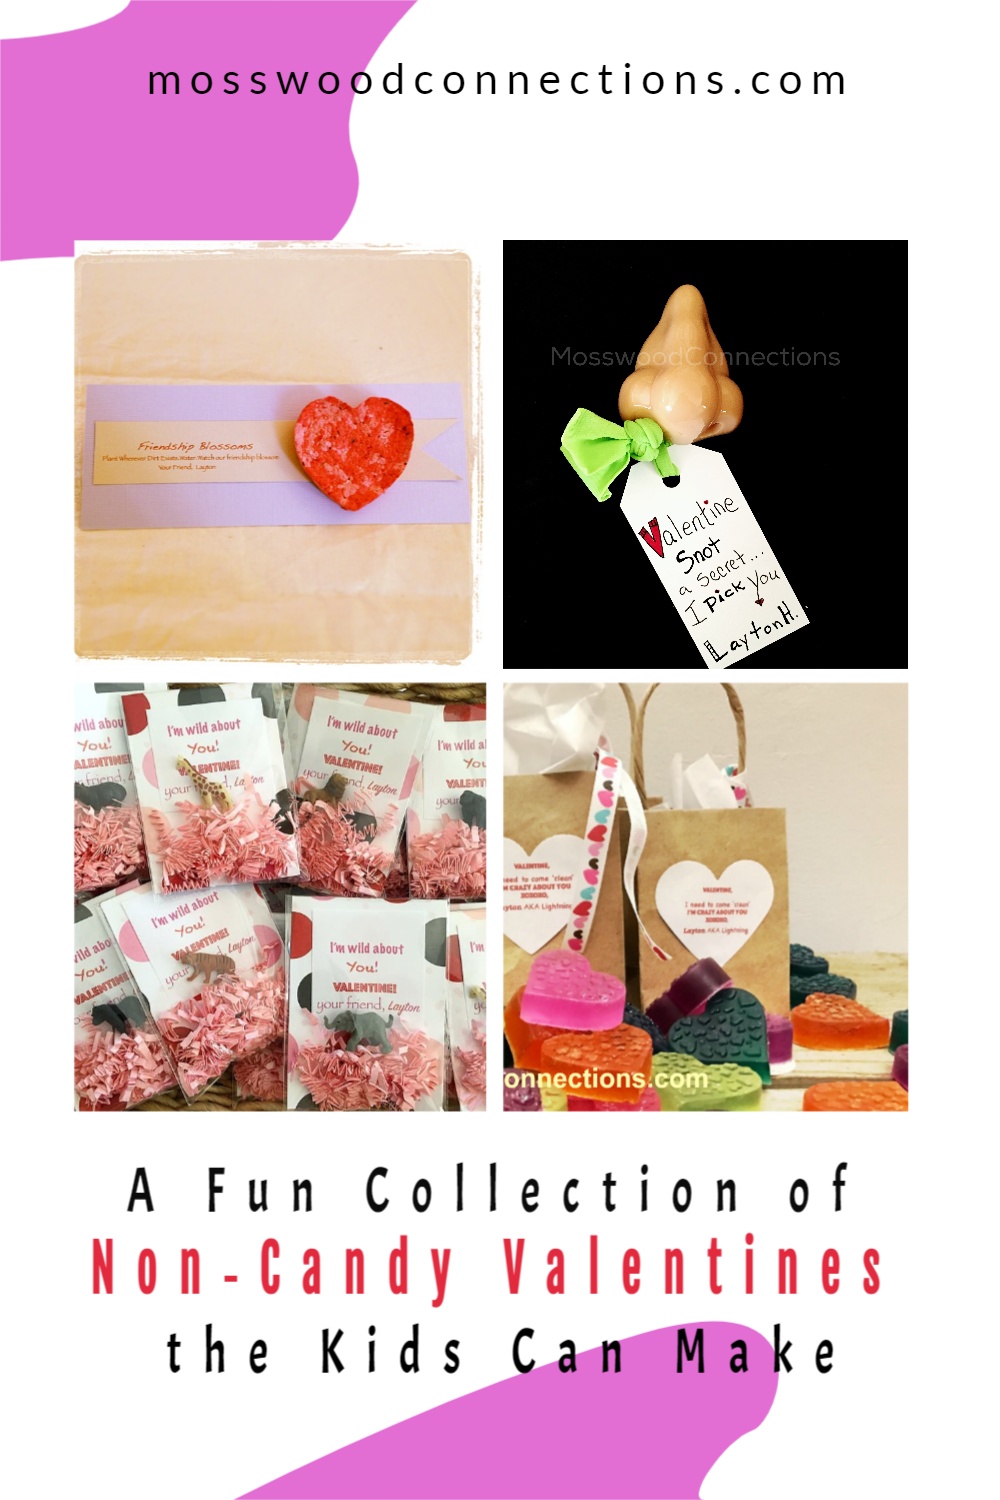 Easy Non-Candy Valentine’s Day Treats #mosswoodconnections #Valentines #crafts #non-candyvalentine #holidays #humor